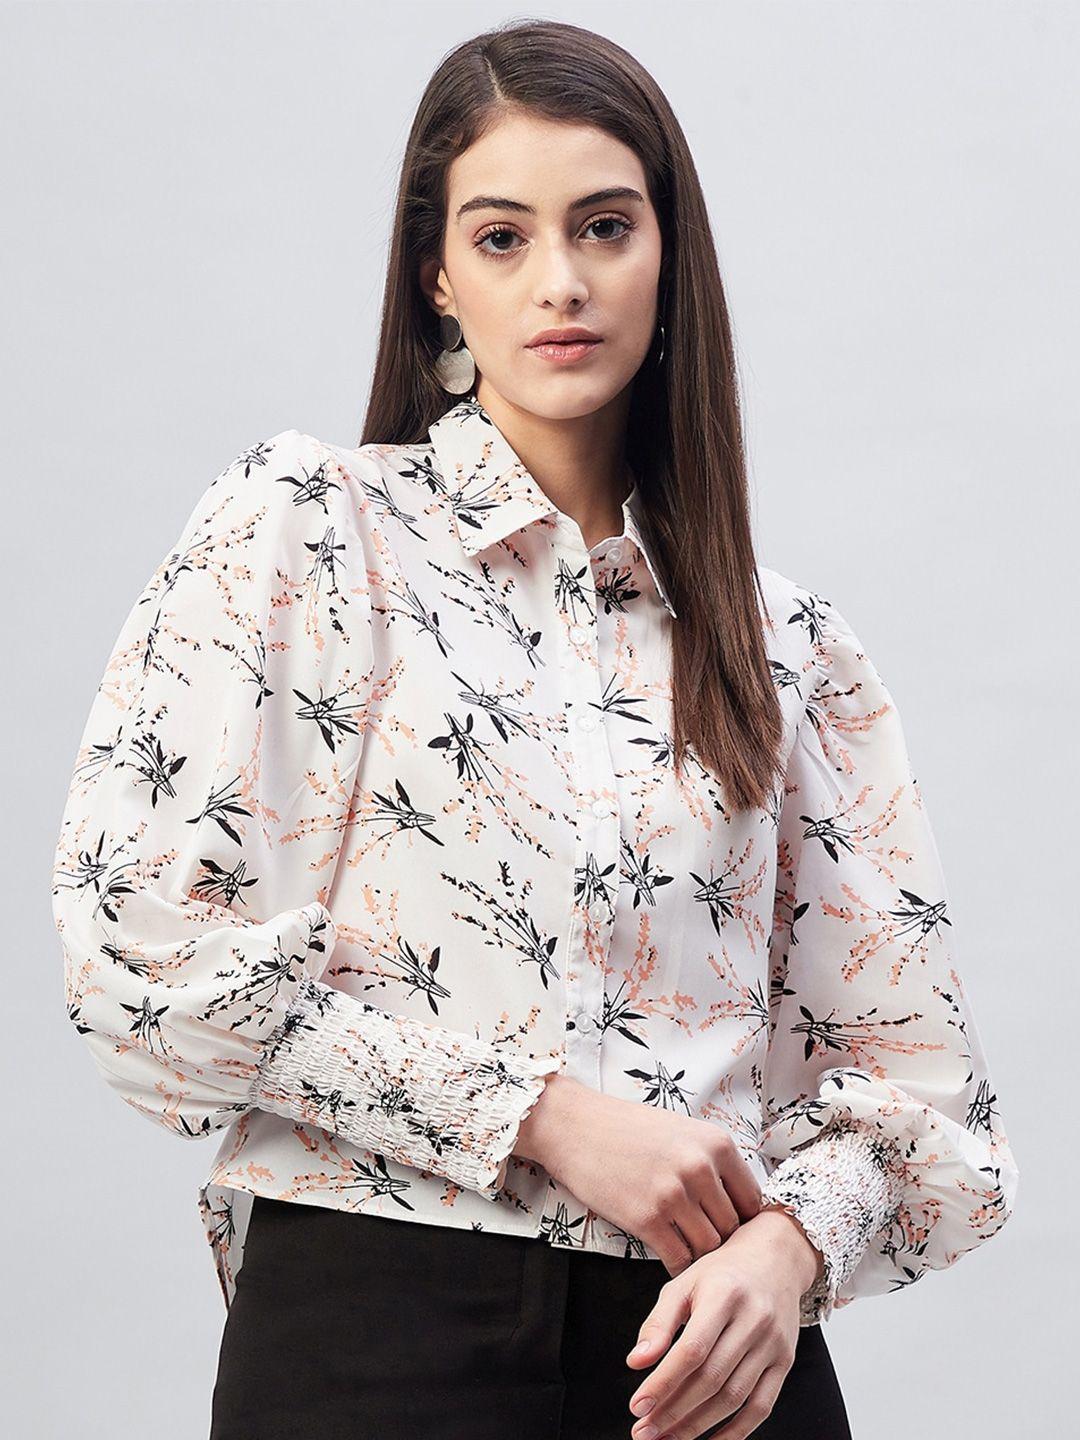 rare floral printed crepe shirt style top